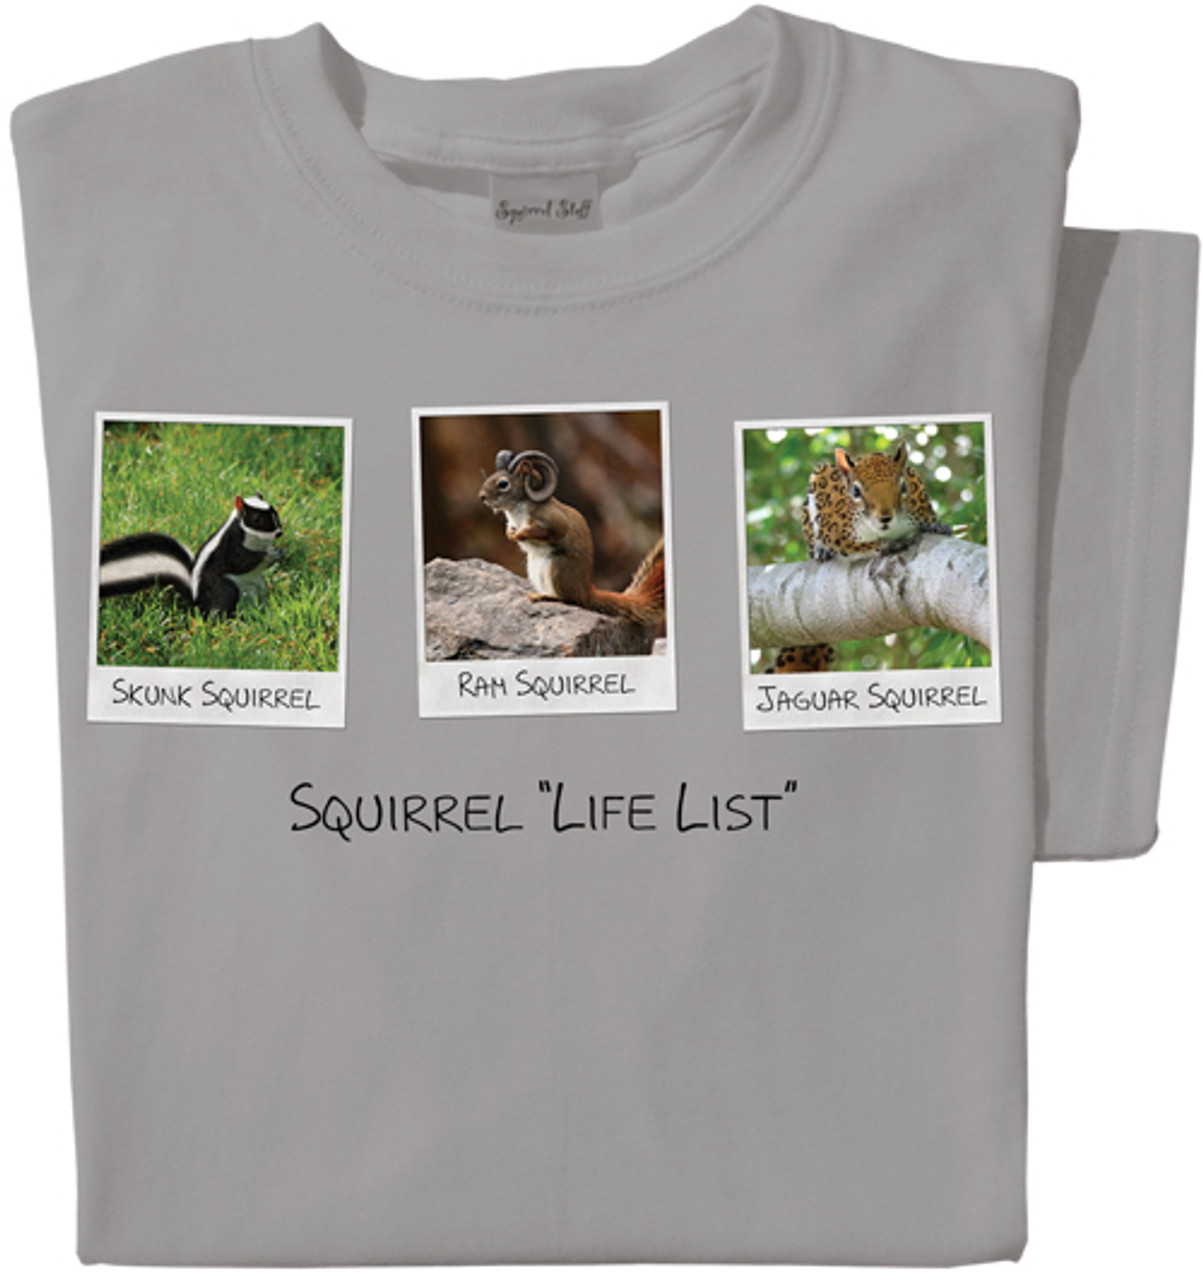 Squirrel Life List T-shirt